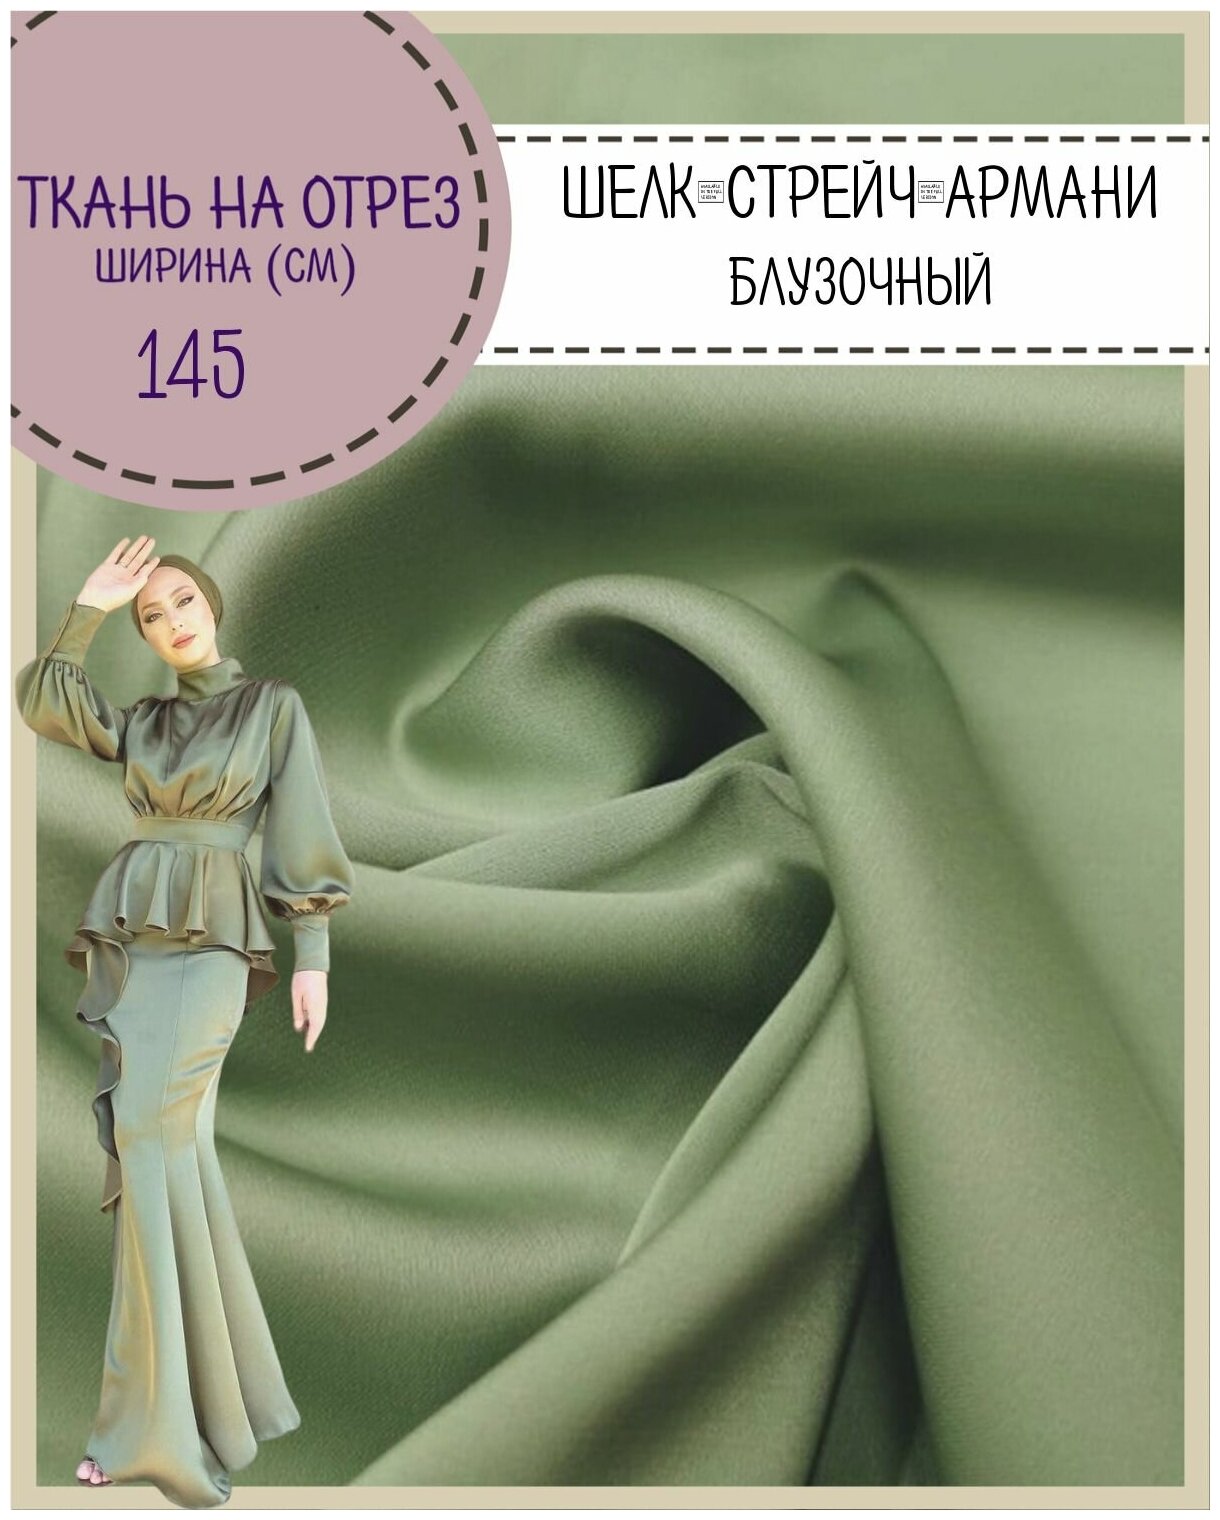 Ткань Шелк "Армани" стрейч/для платья/ блузы, цв. полынь, пл. 90 г/кв, ш-145 см, на отрез, цена за пог. метр